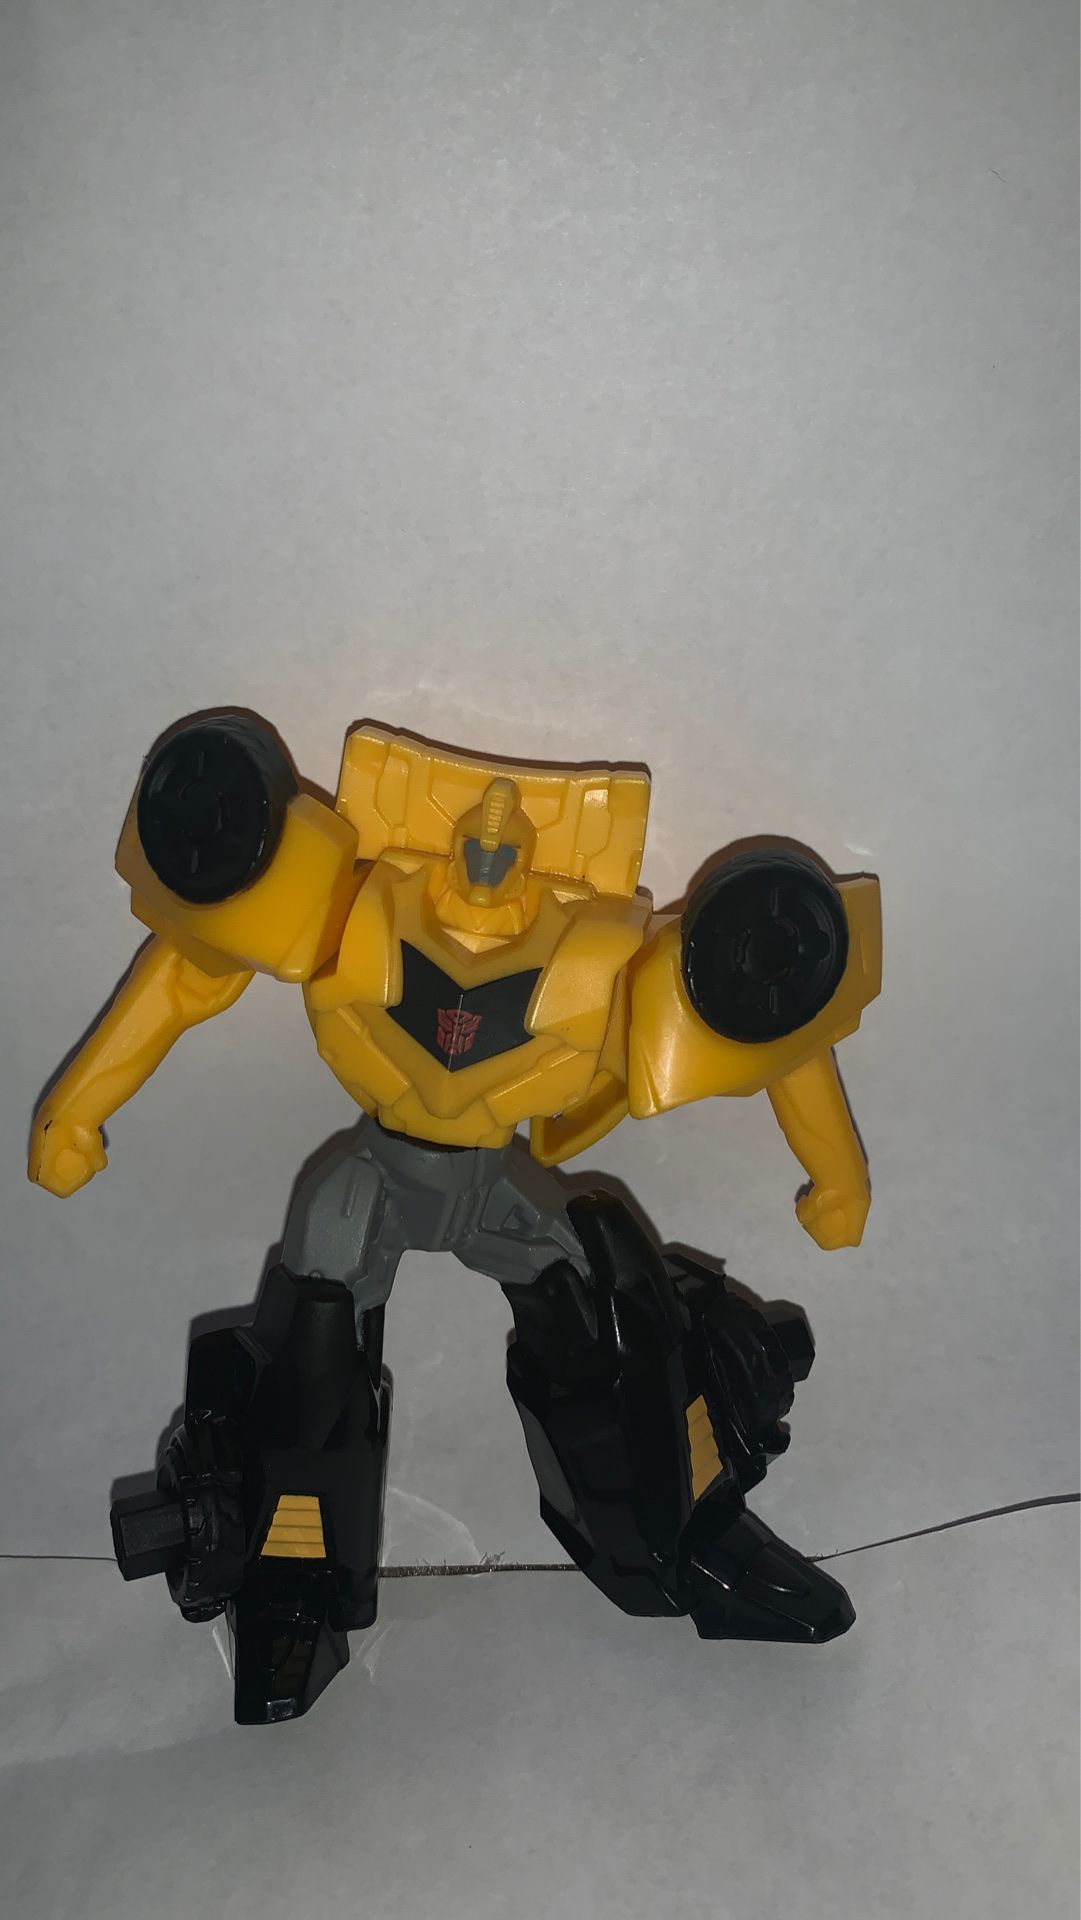 Transformer Bumblebee Toy